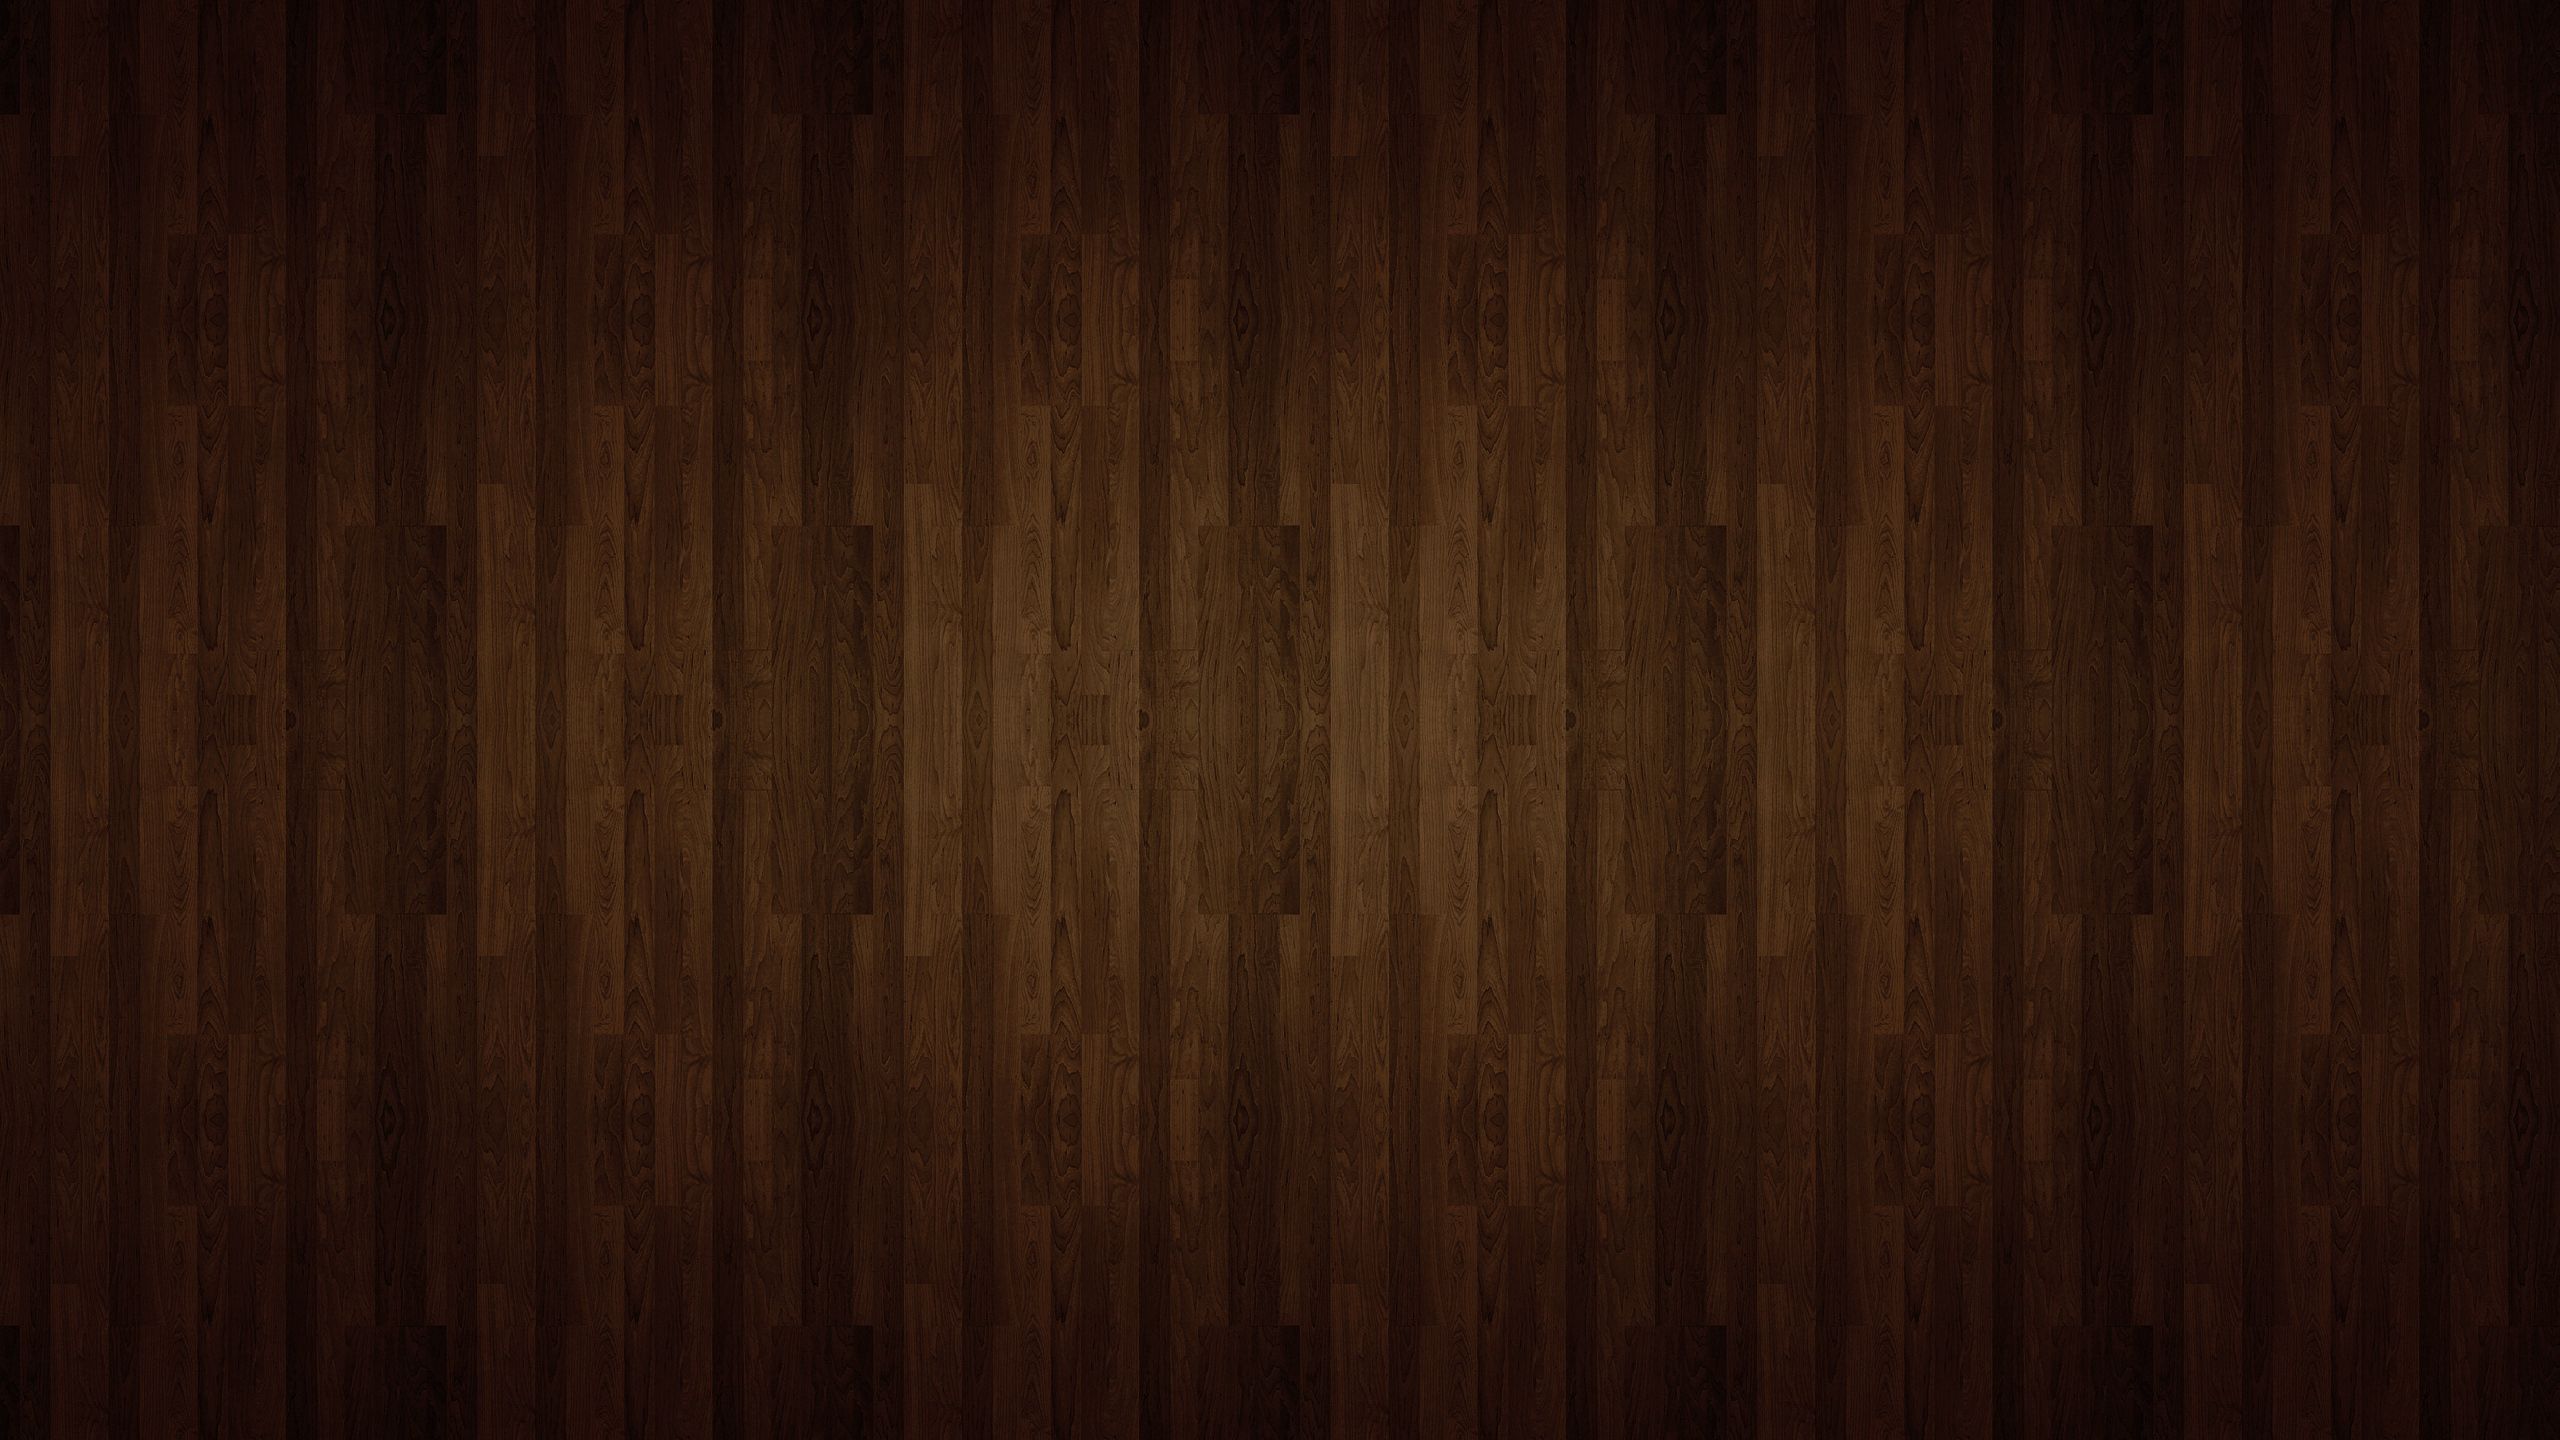 Download wallpaper 2560x1440 parquet, wood, surface, board widescreen 16:9 HD background